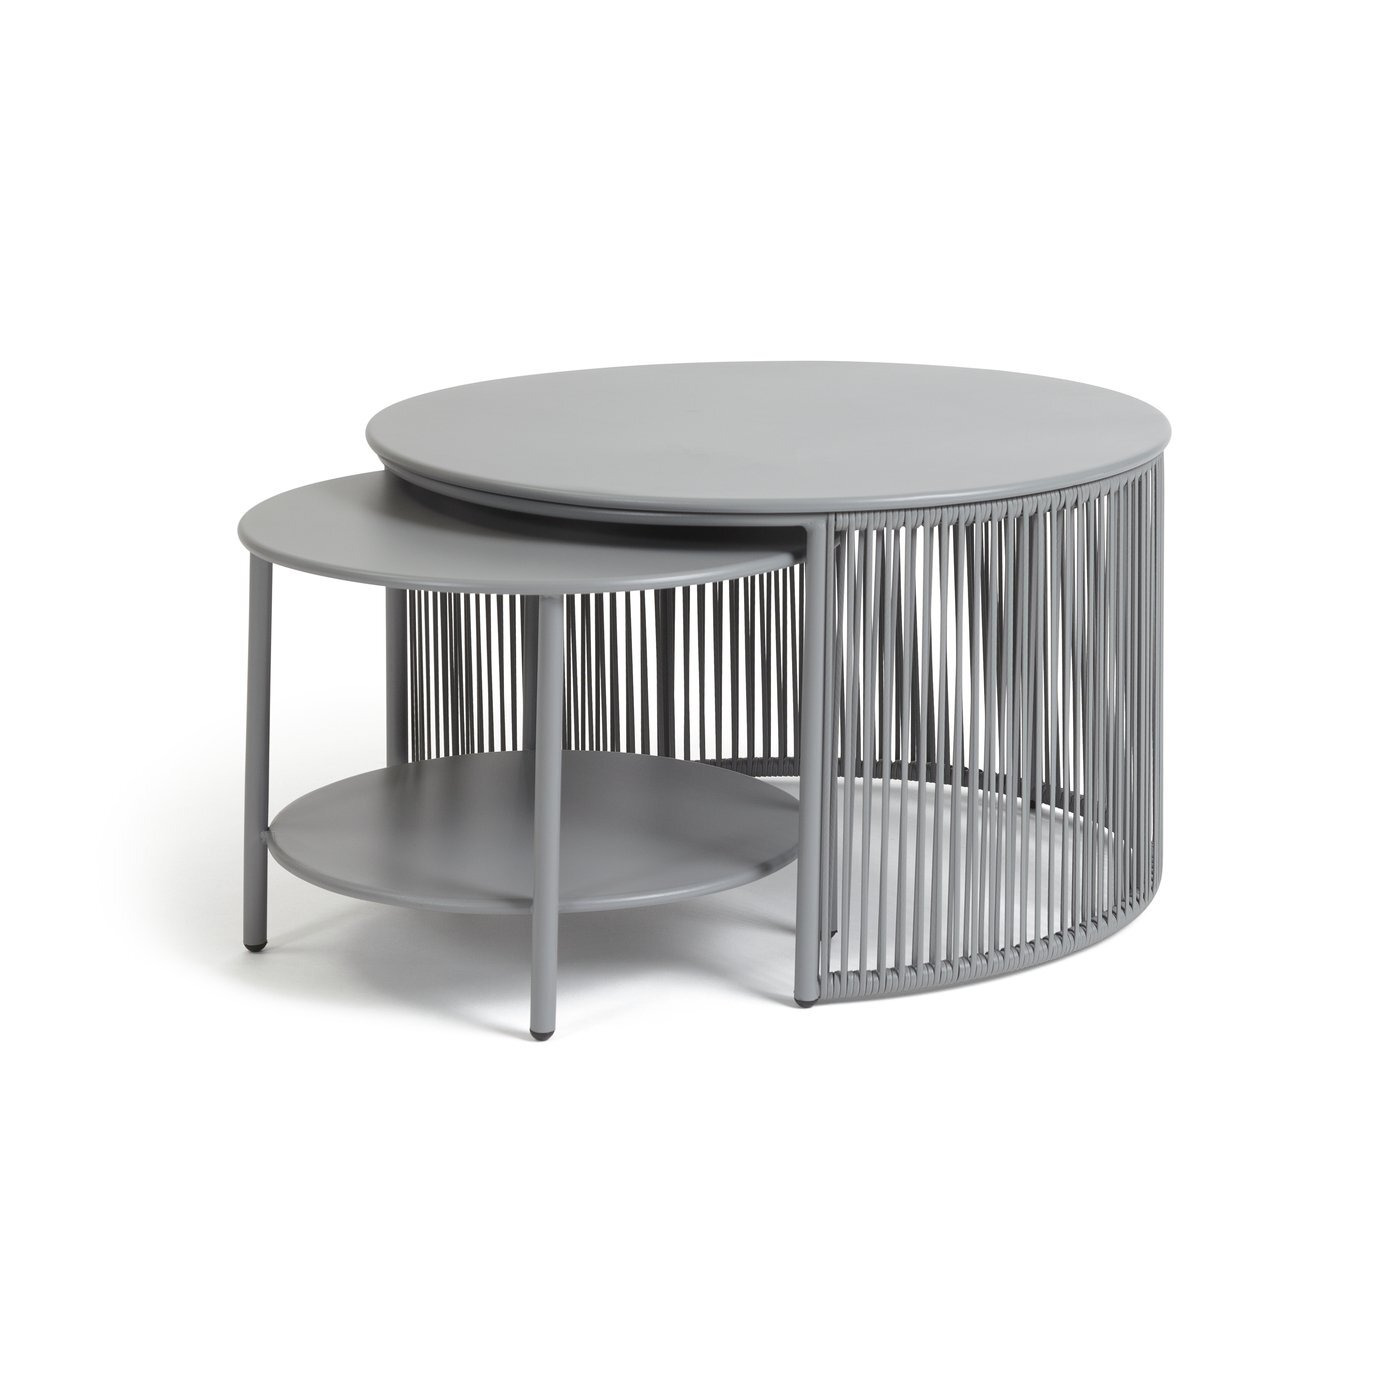 Habitat Ipanema Metal Garden Coffee Table - Grey - image 1